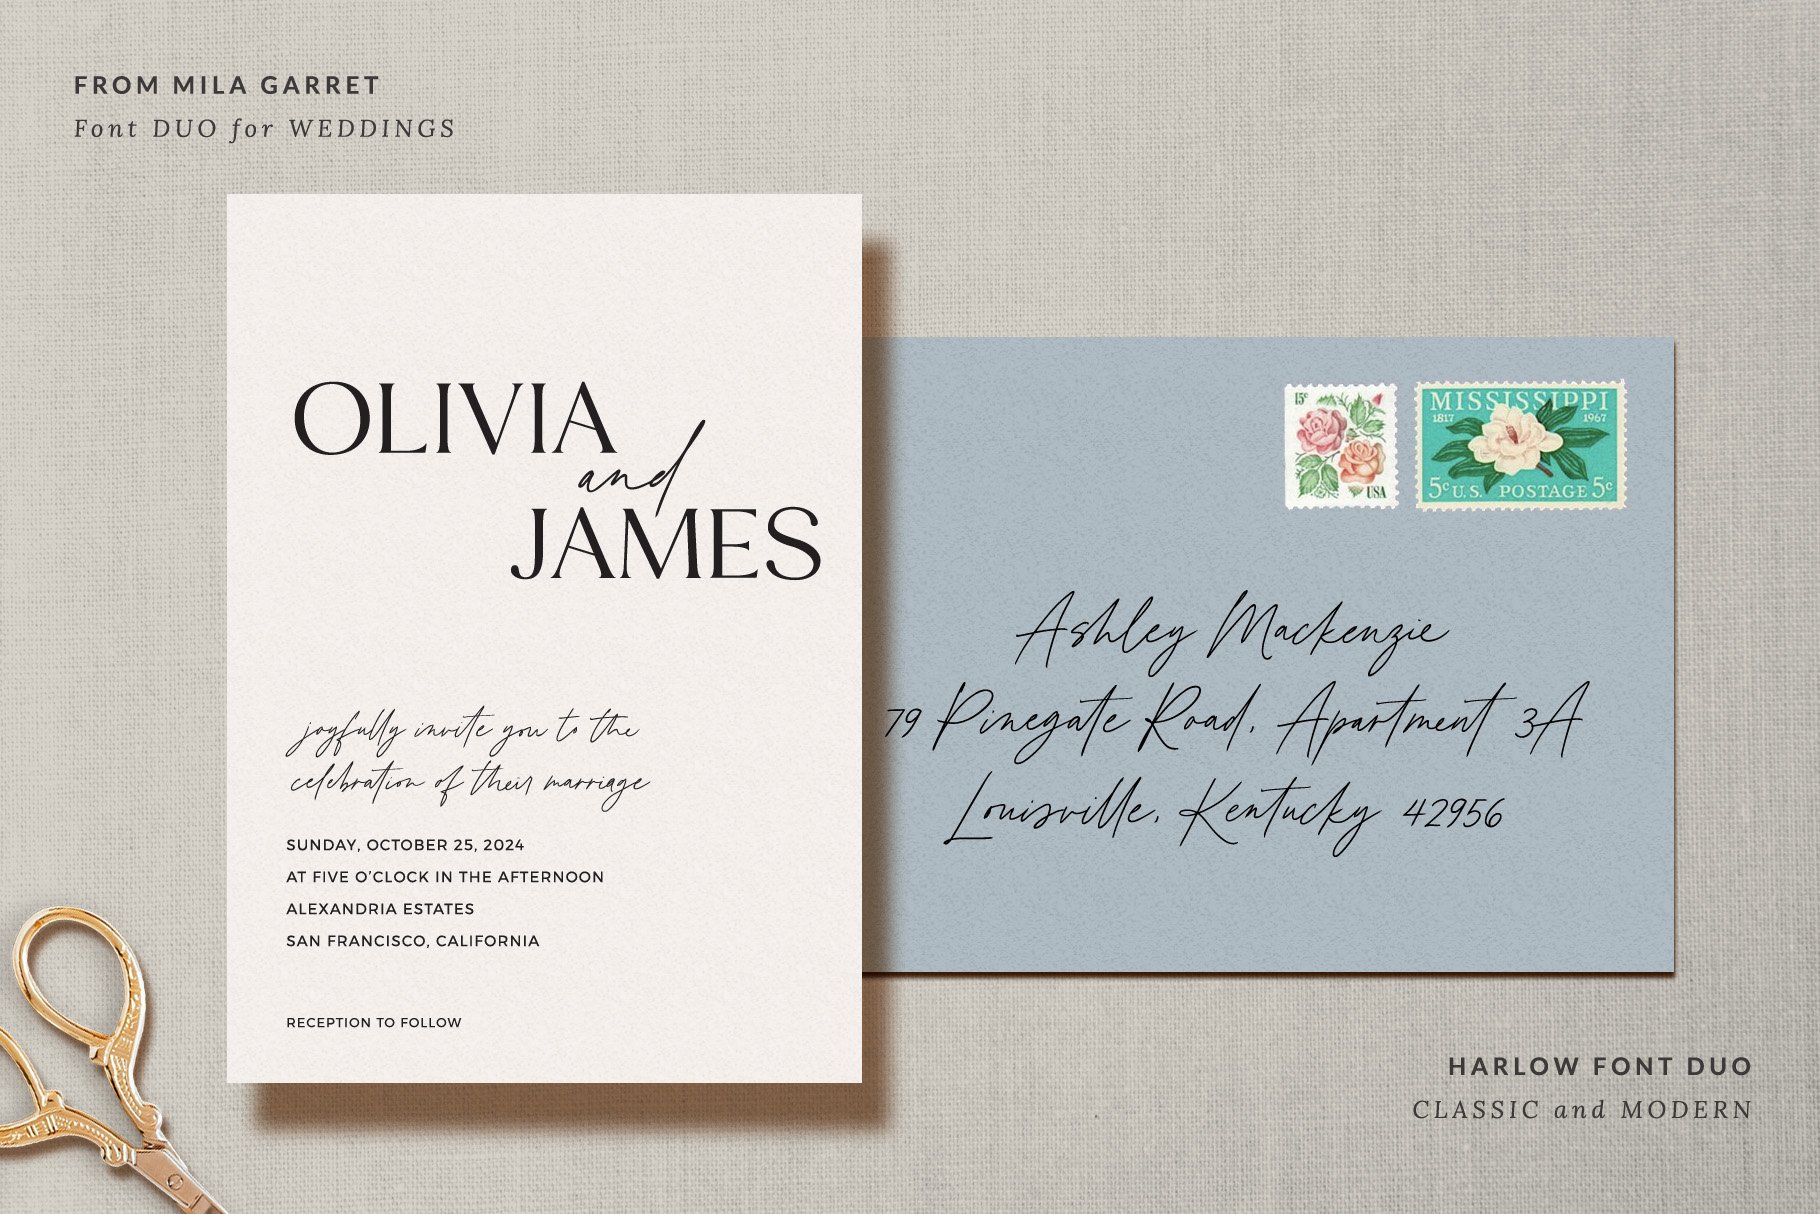 minimalist wedding invitations fonts font duo serif script pairing elegant handwritten clean simple branding websites harlow font duo mila garret 914